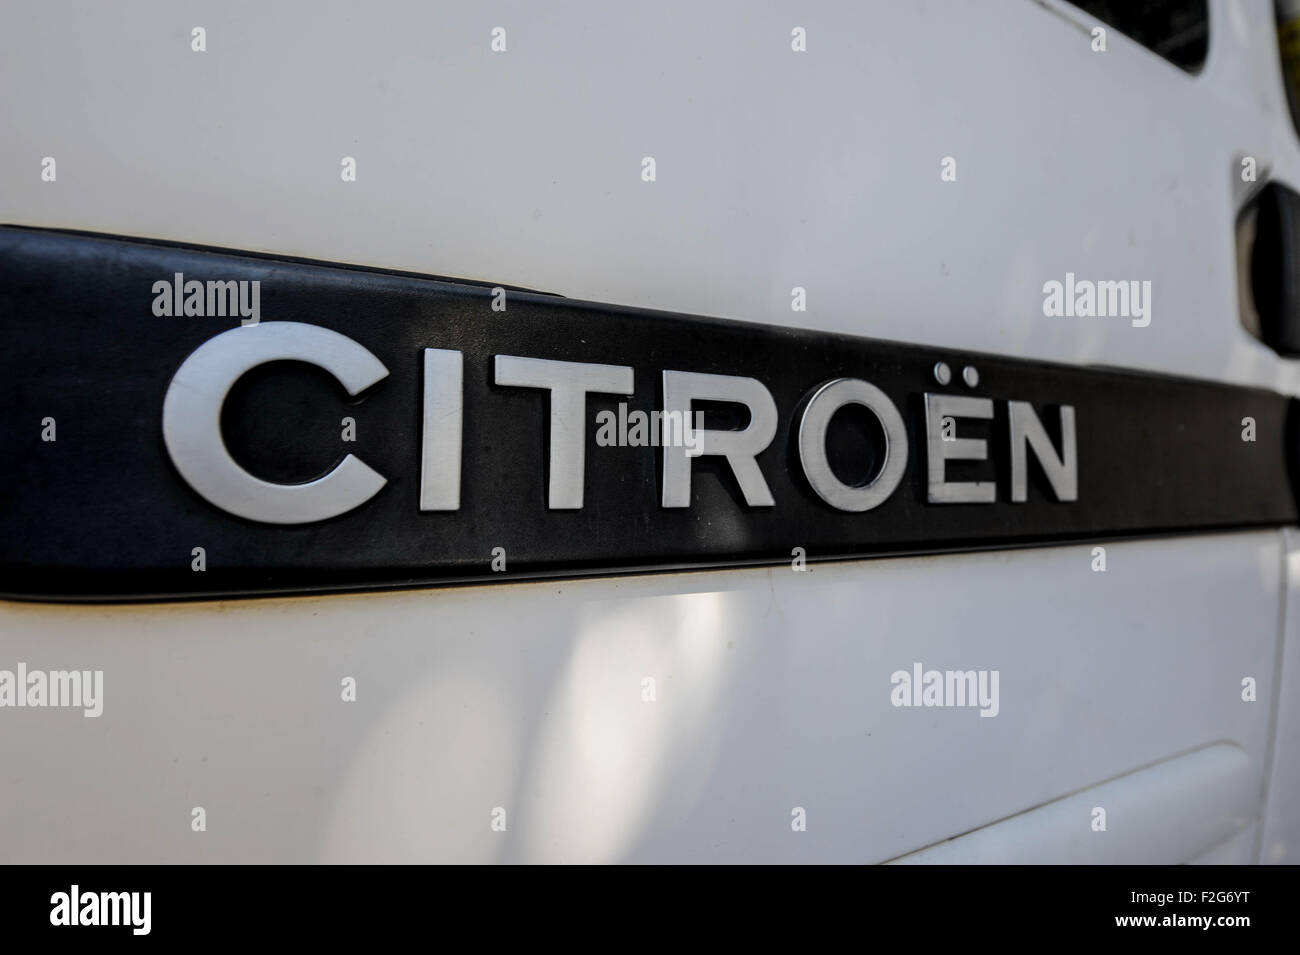 Automobilhersteller Citroën - Automóvil Citroën Stockfoto